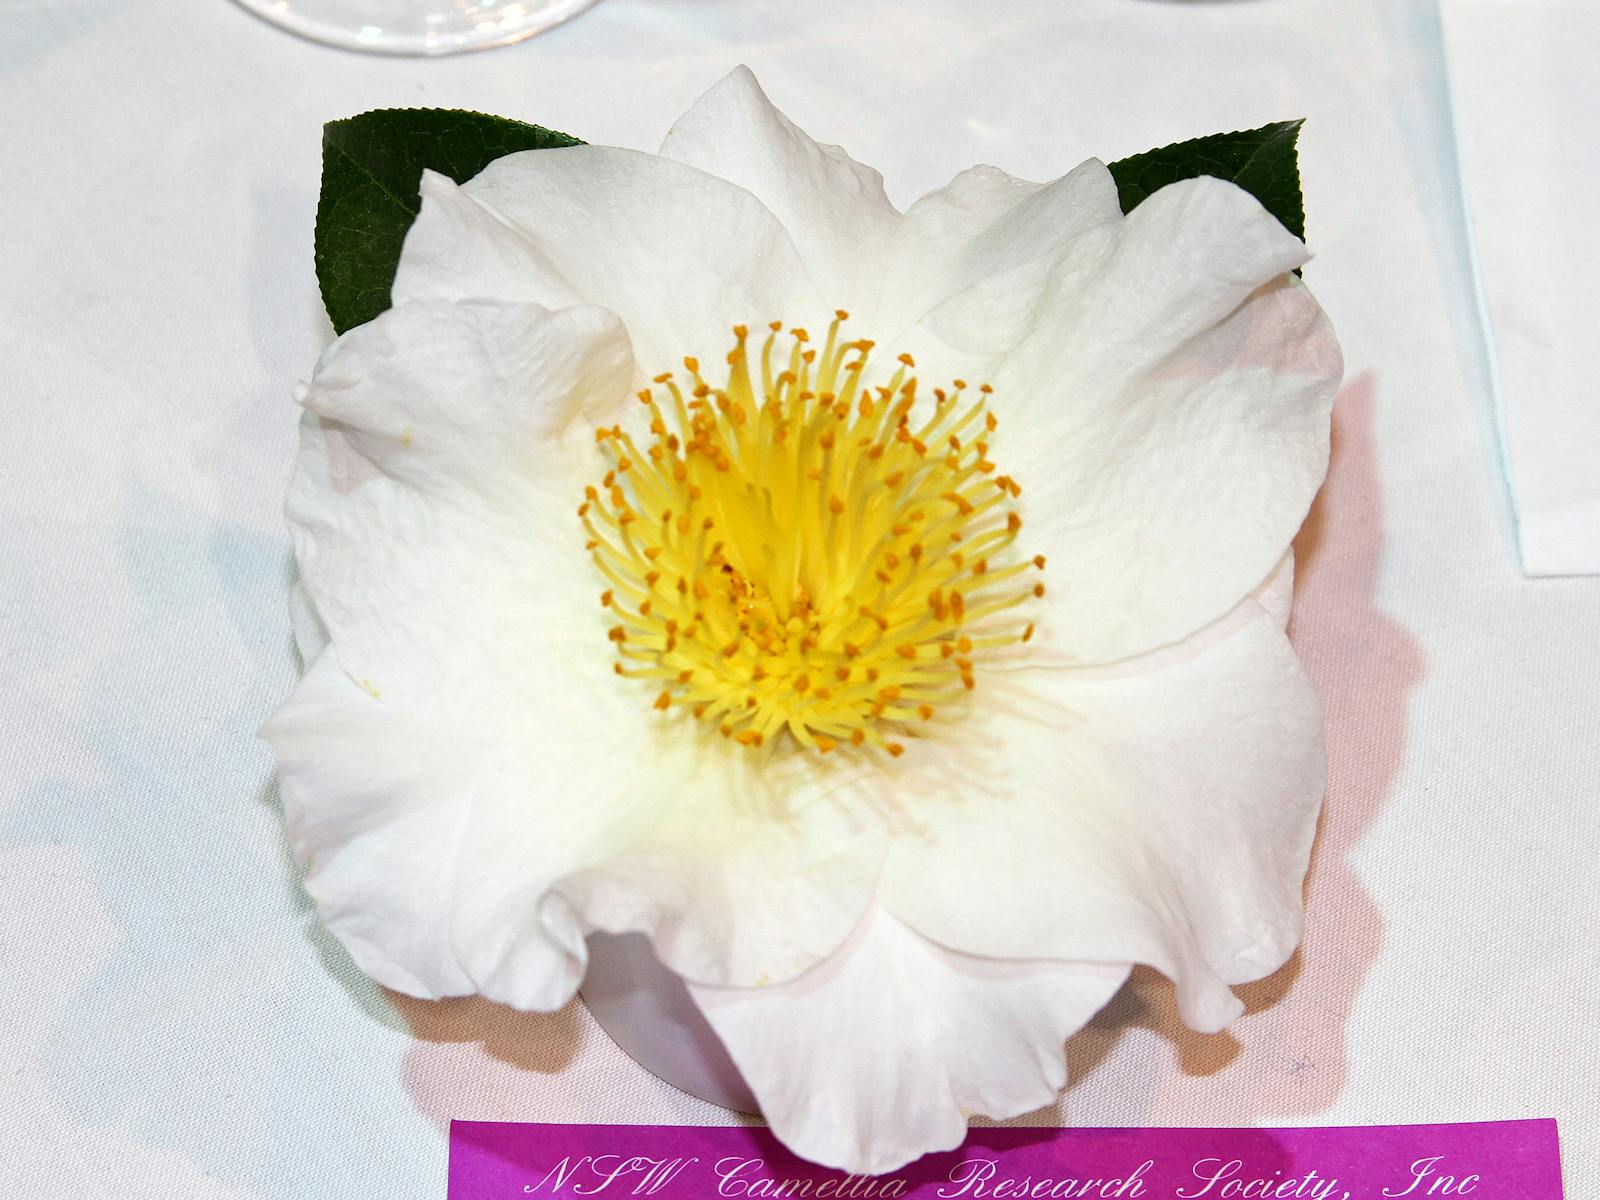 Image for Camellia Show